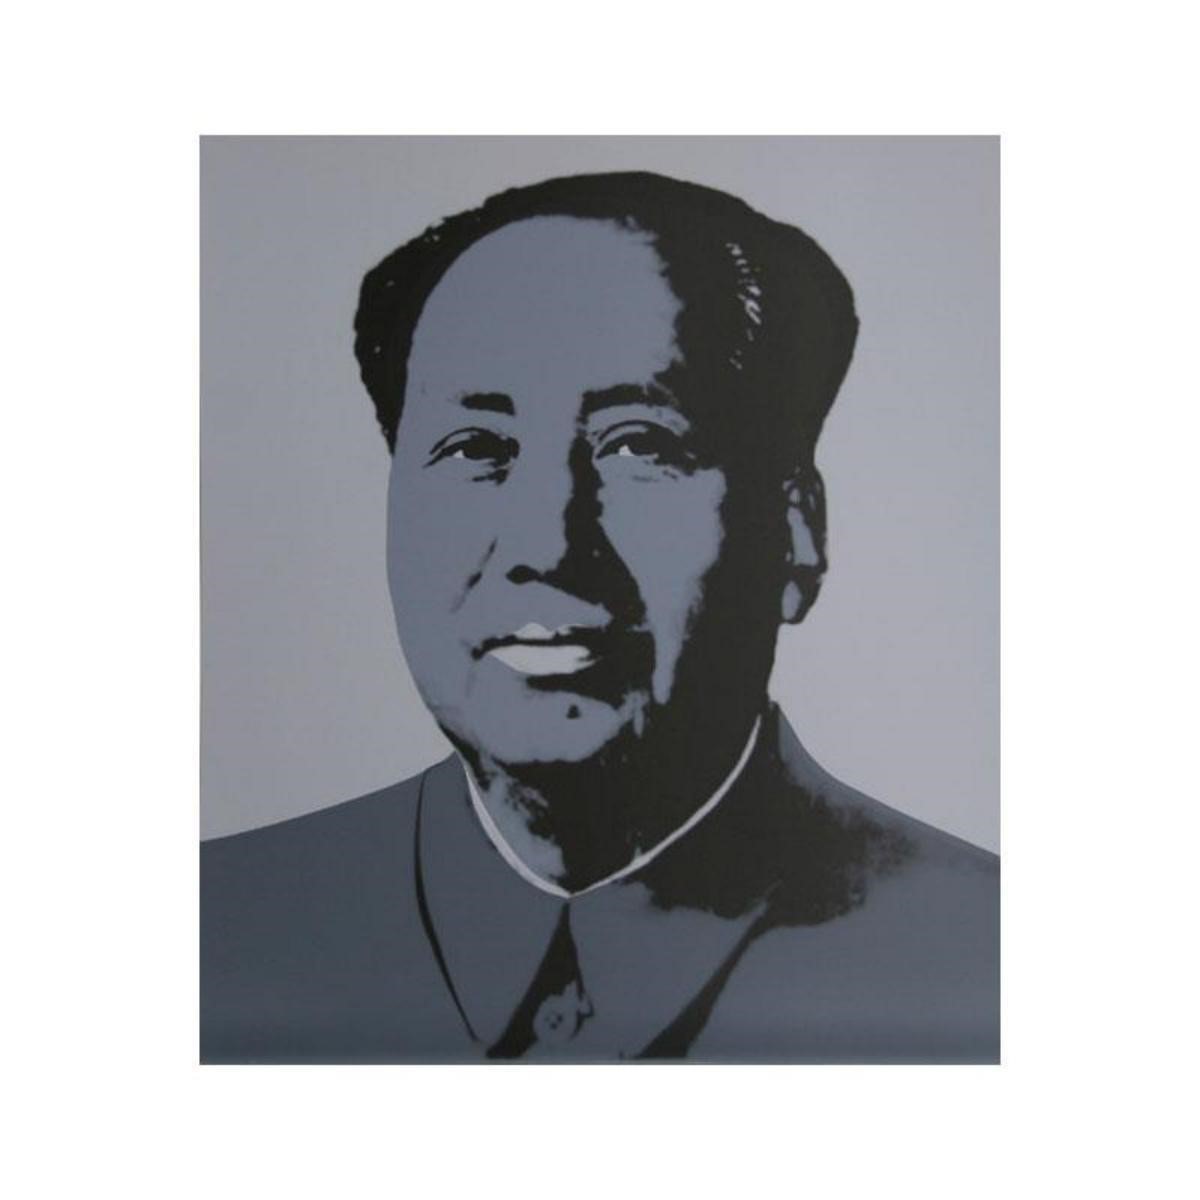 Andy Warhol "Mao Grey" Silk Screen Print from Sund